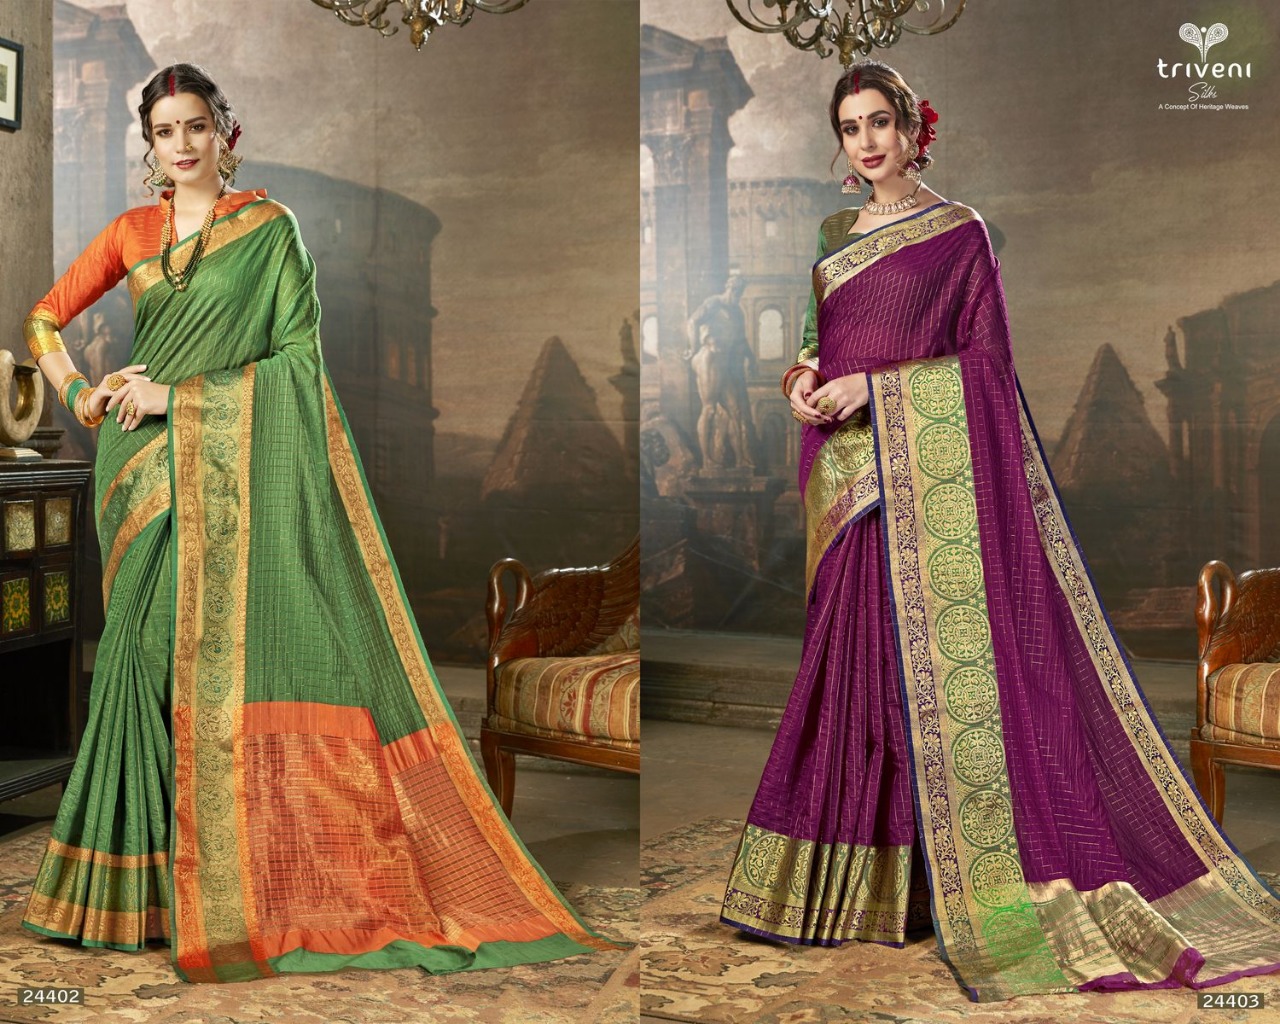 Triveni Sasya fancy colourfull sarees collection at wholesale rate